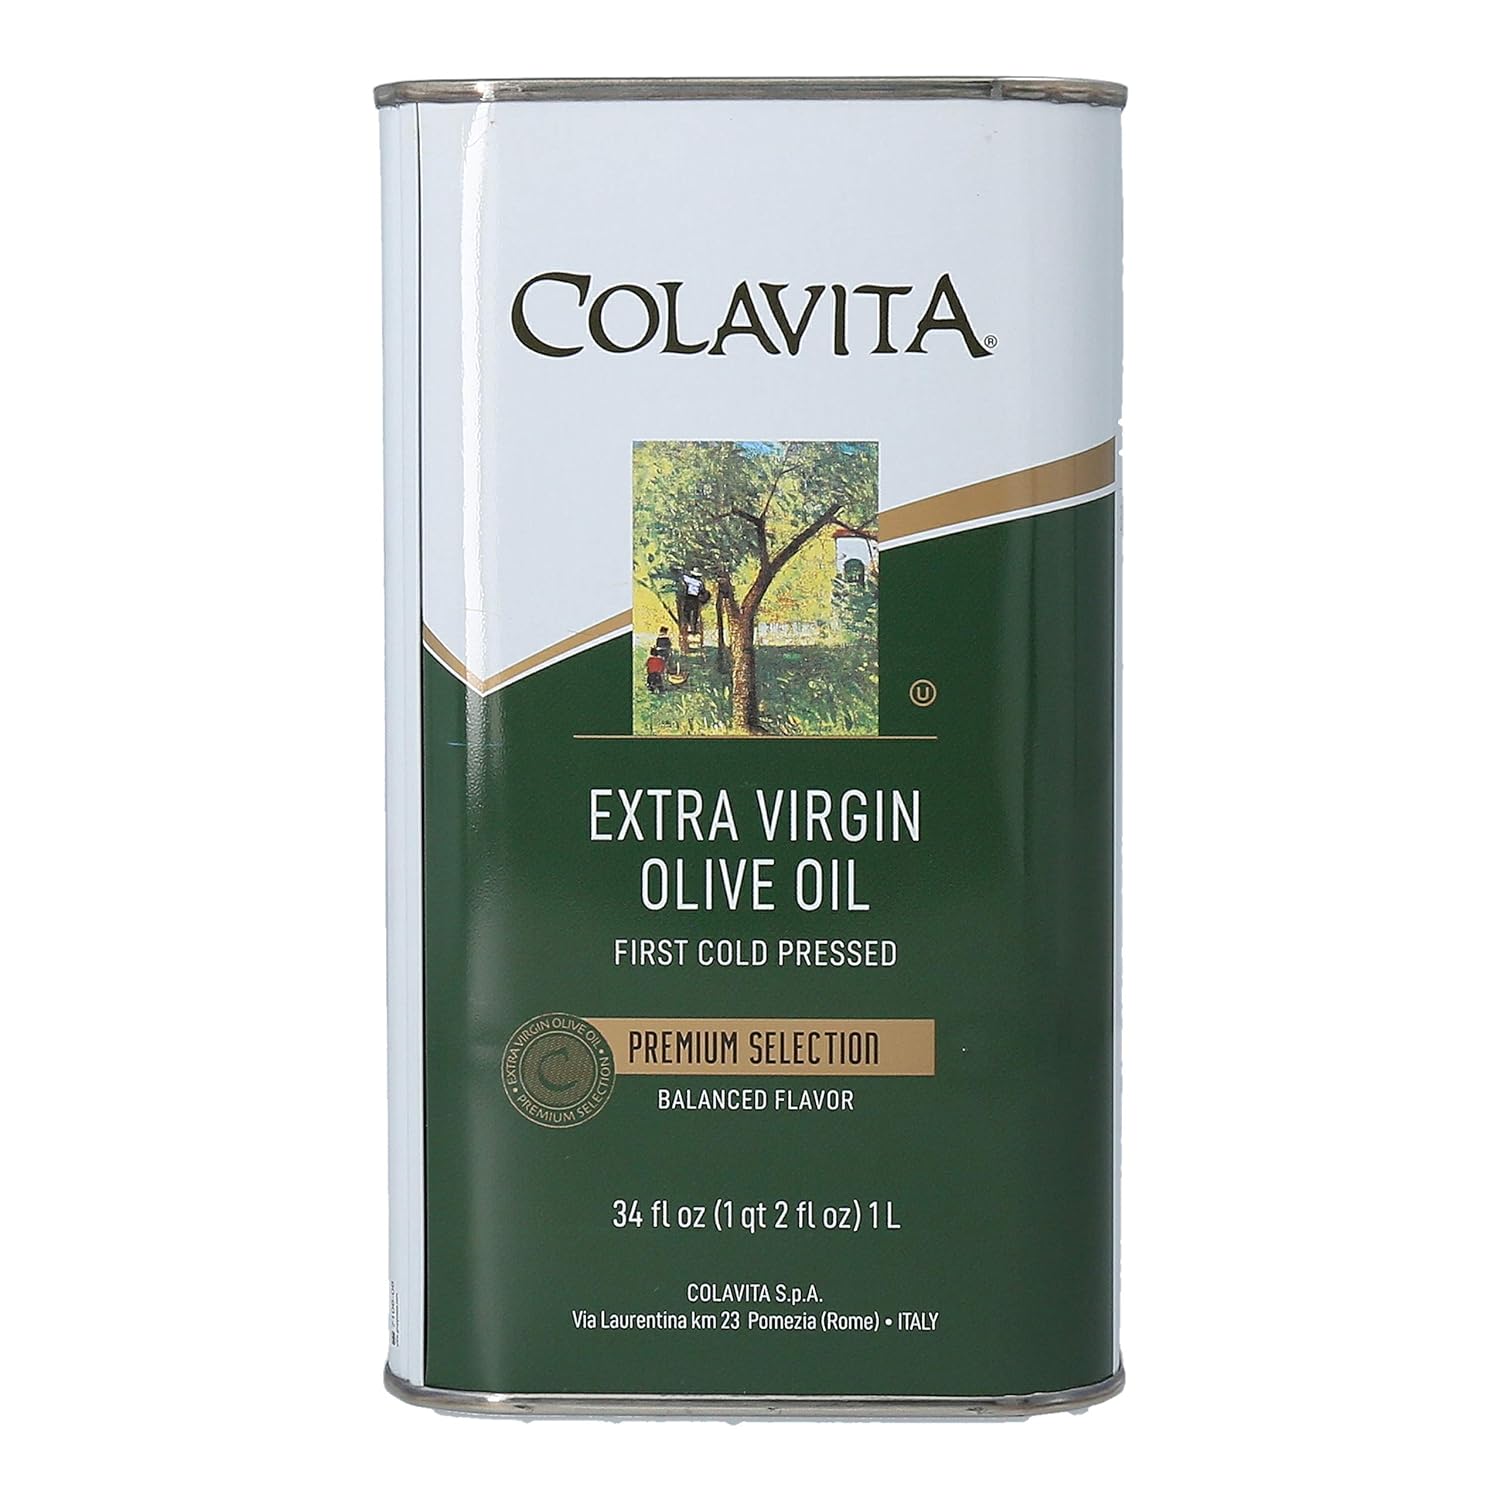 Colavita Premium Selection Extra Virgin Olive Oil - Twin Pack, 34 Fl Oz Each